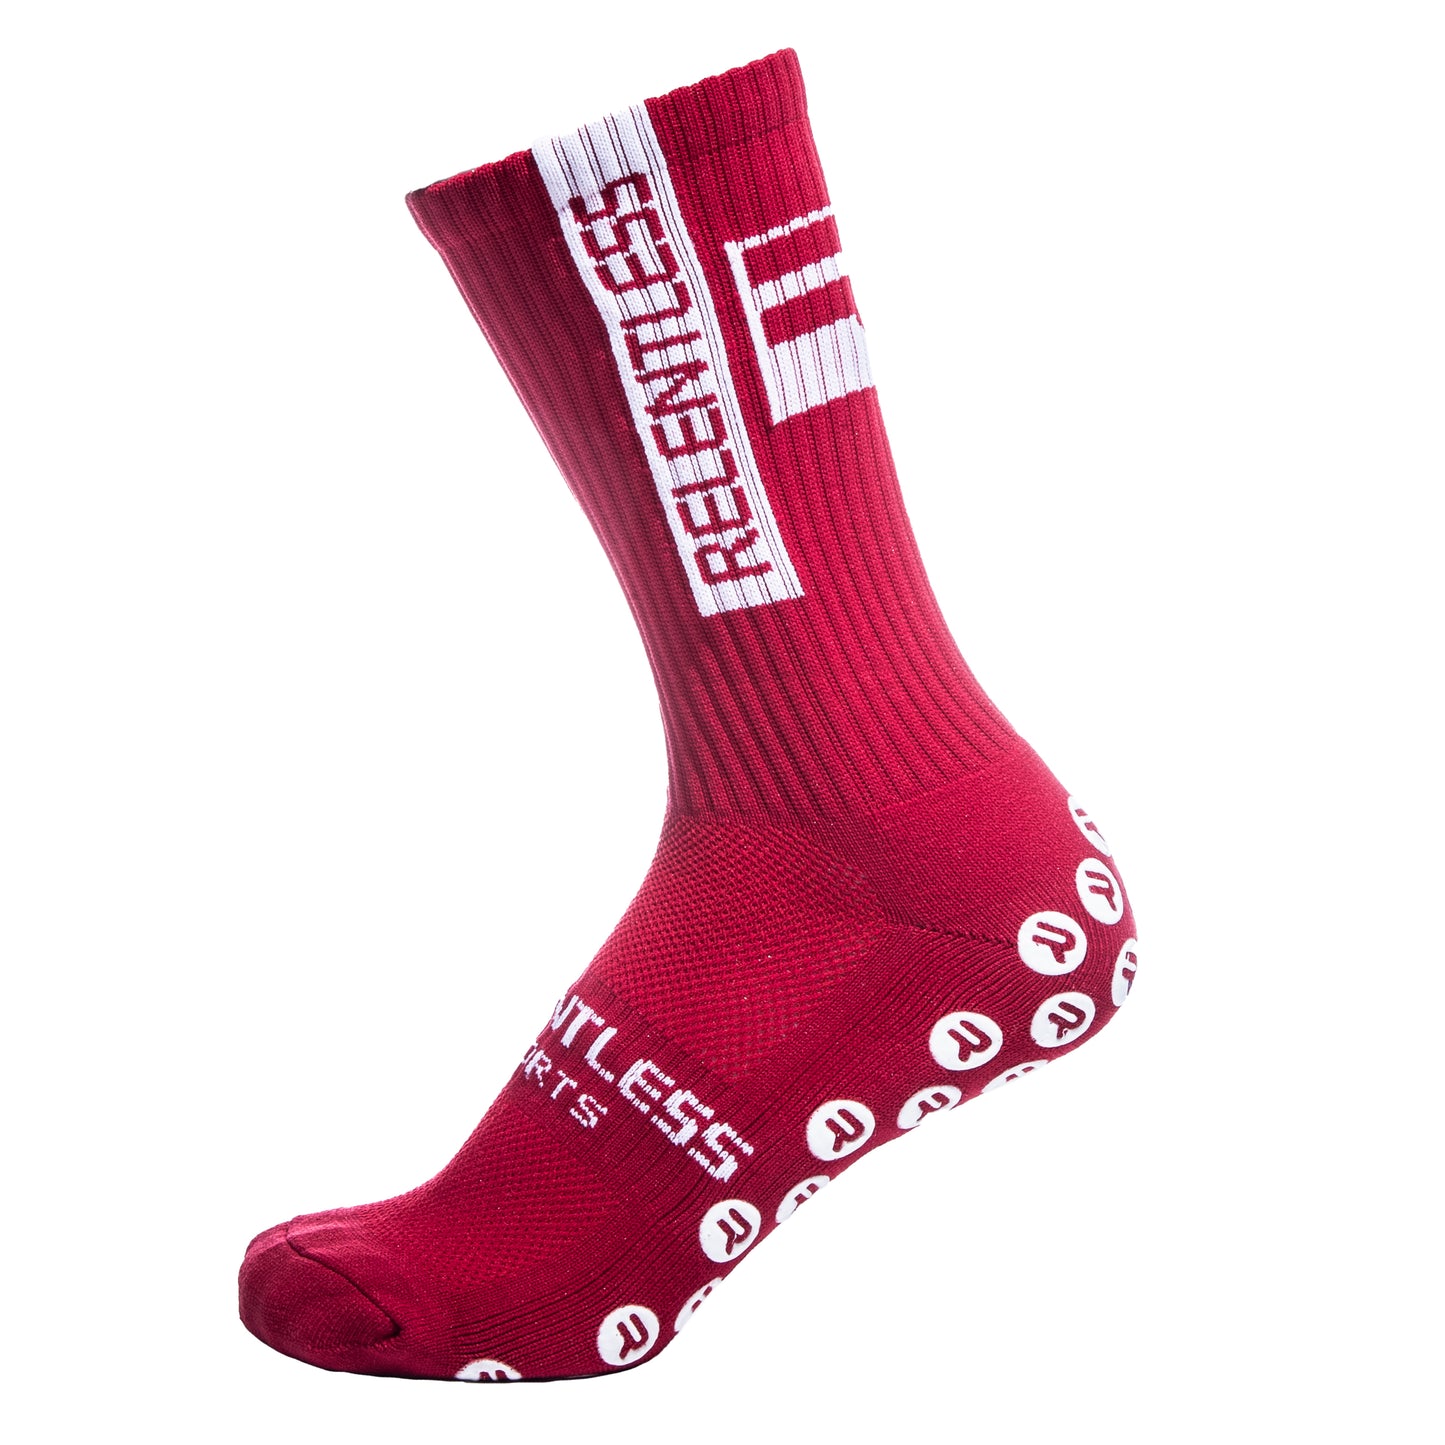 Relentless Grip Sock - Red